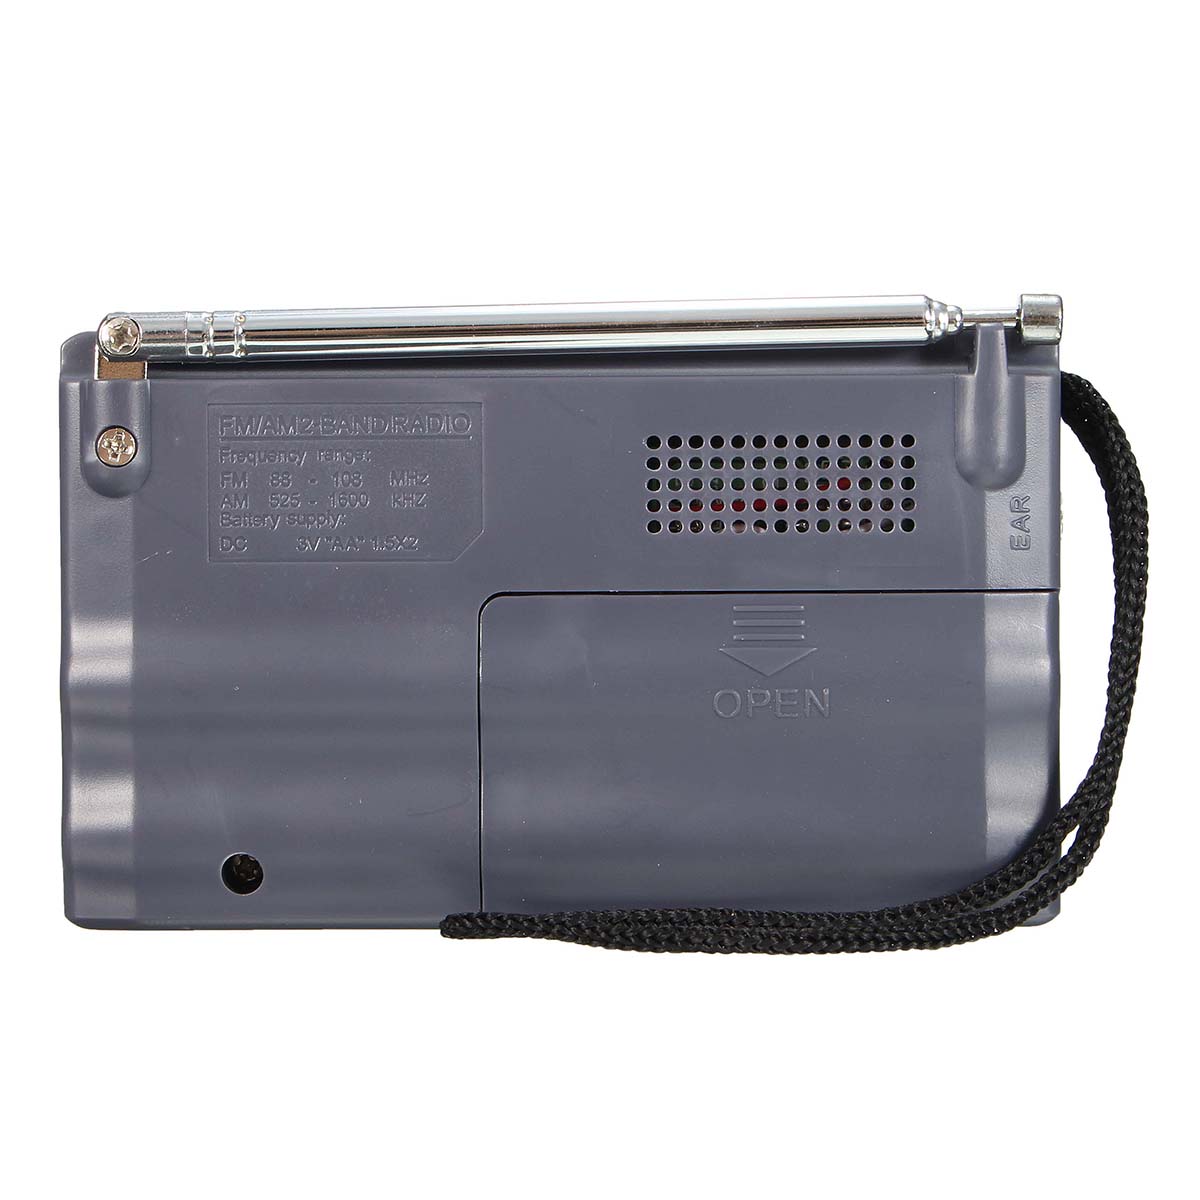 INDIN-BC-R21-AMFM-Mini-Portable-Telescopic-Antenna-Radio-Pocket-Speaker-Outdoor-1150855